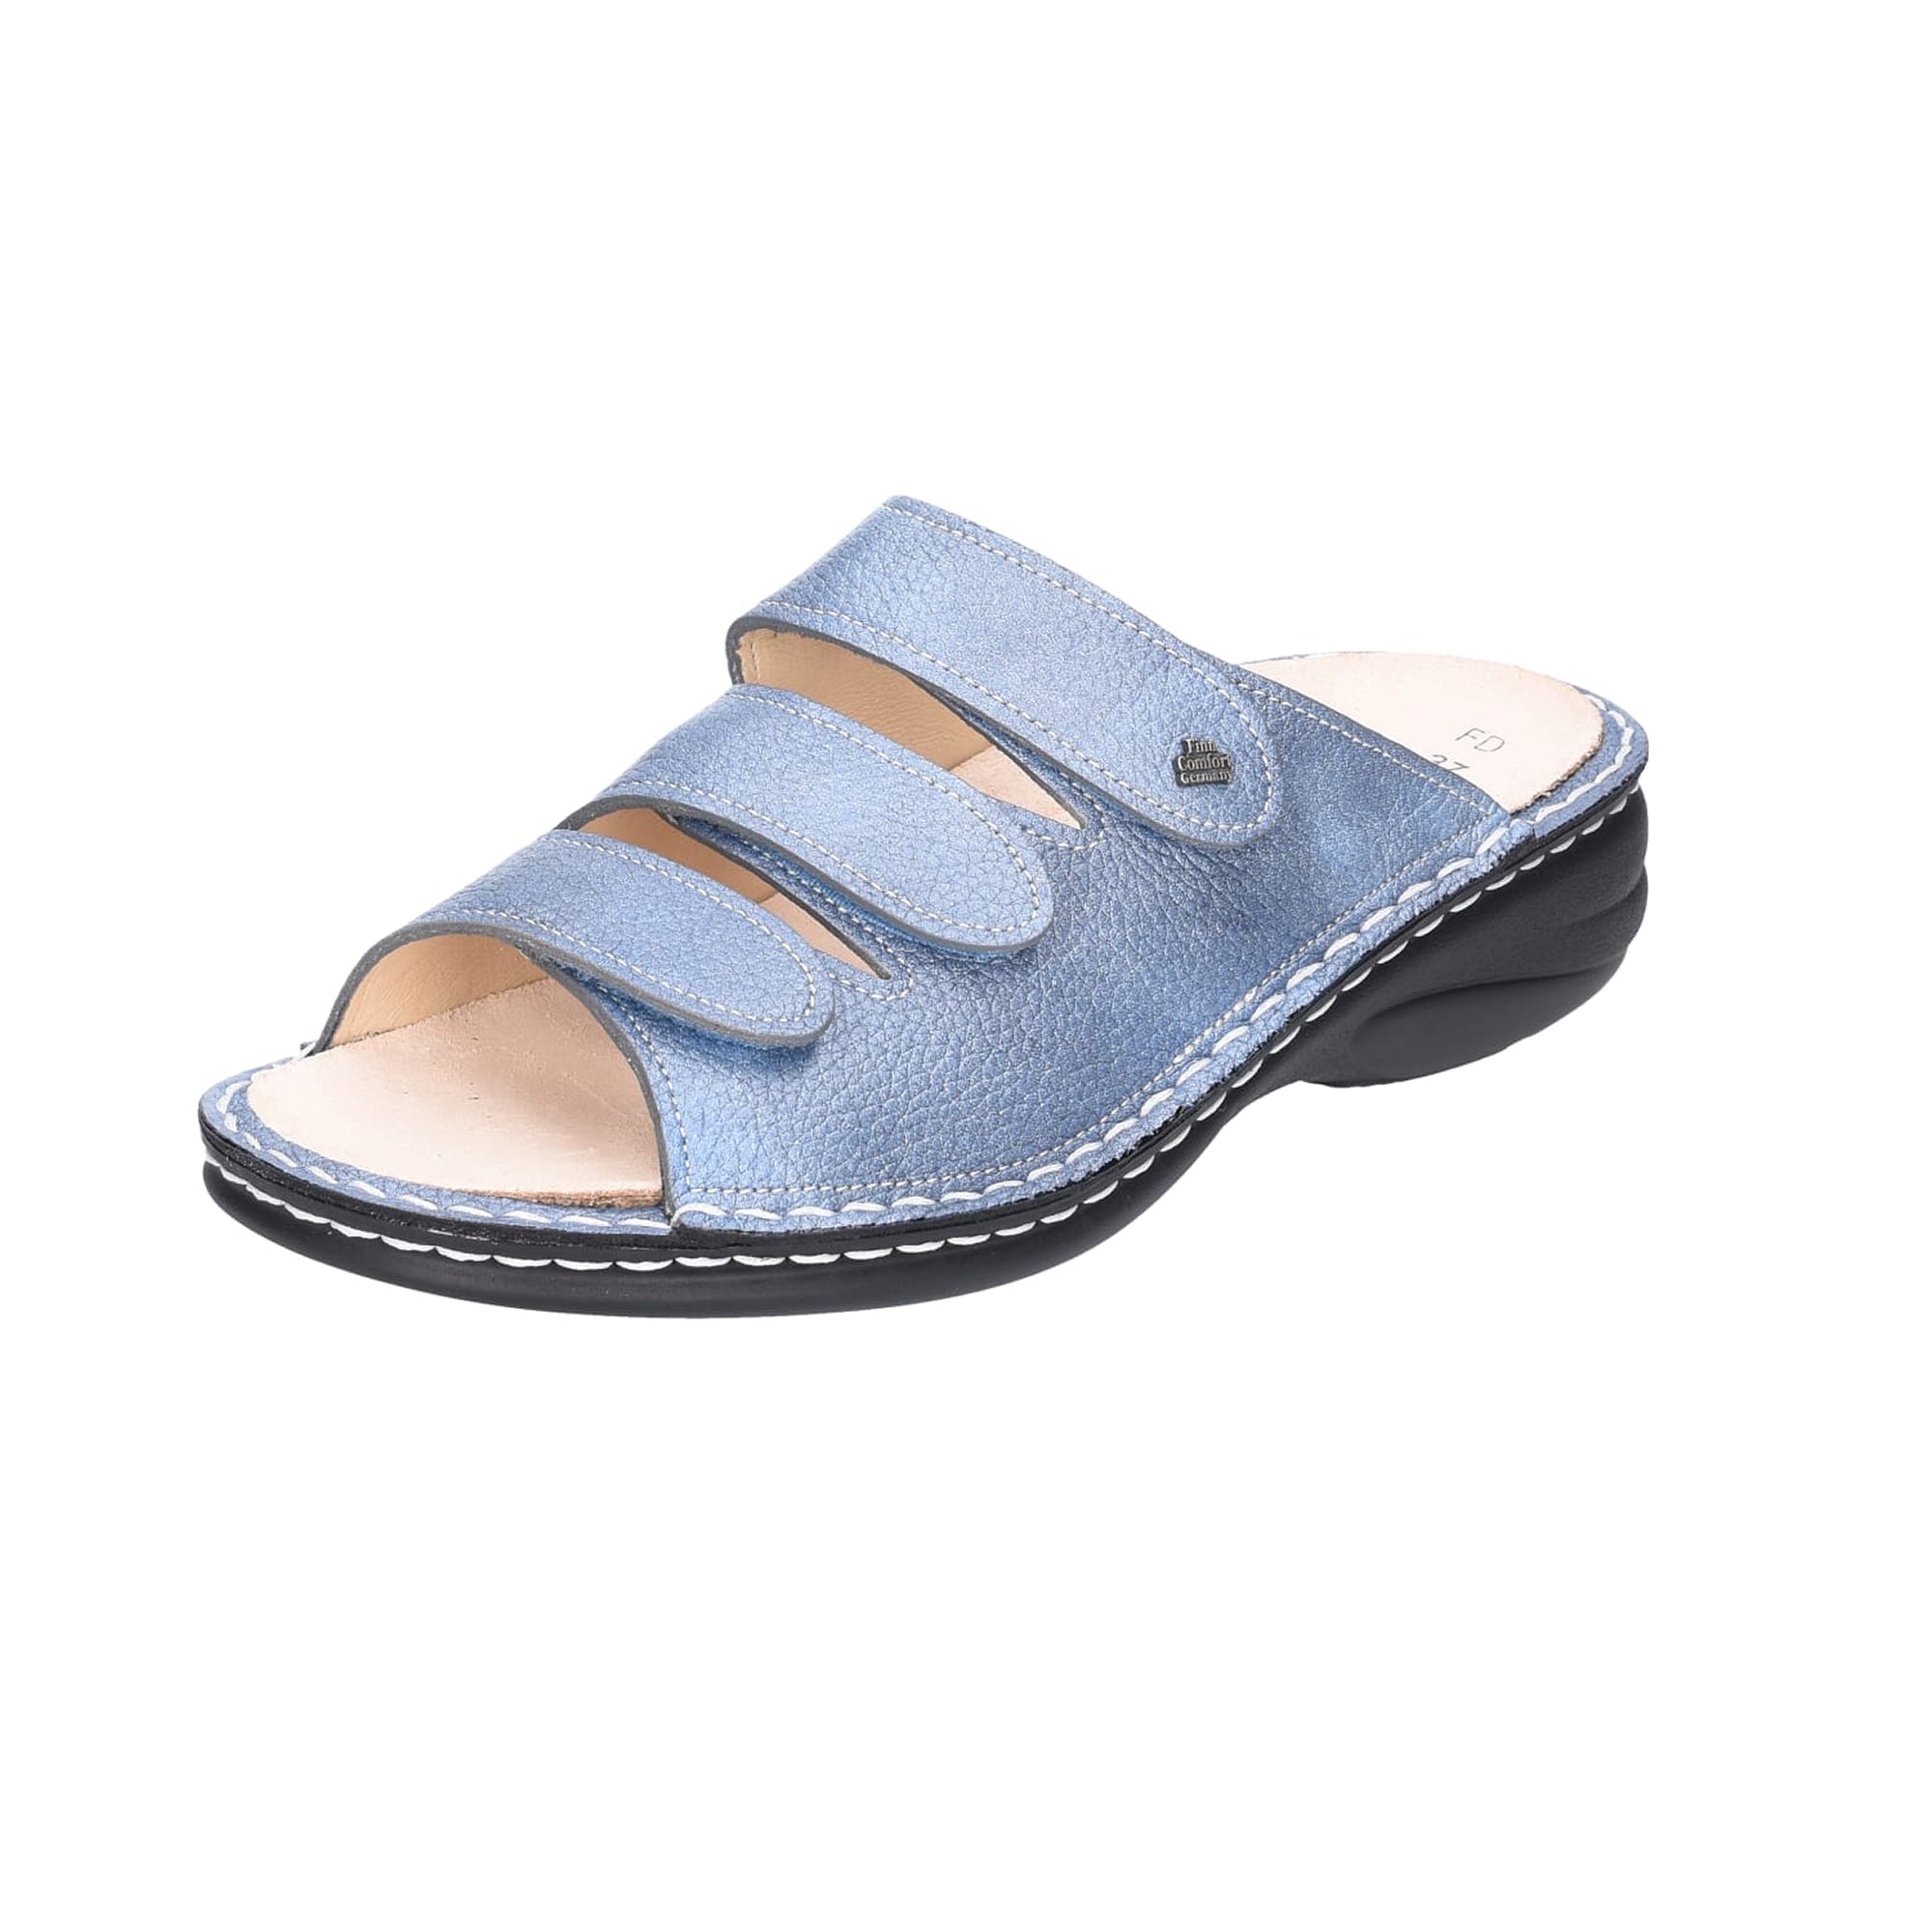 Finn Comfort Hellas Women's Comfortable Blue Shoes - Stylish & Durable